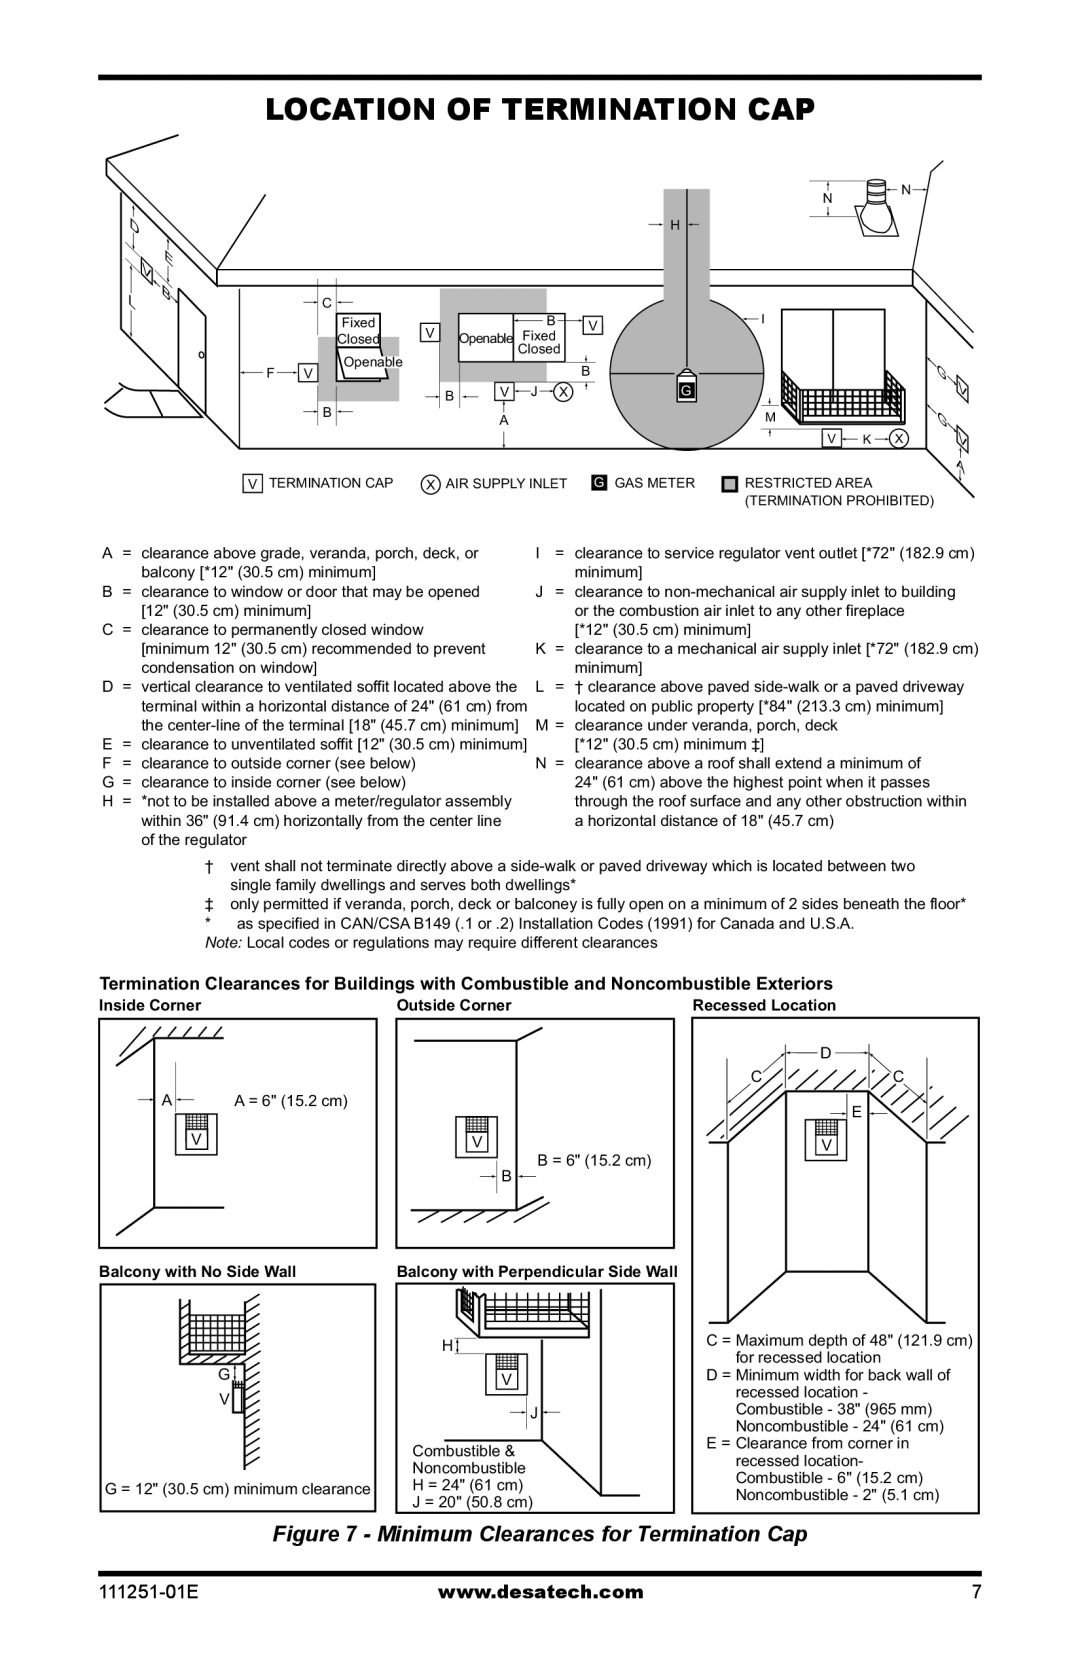 Desa (V)T36EPA installation manual Location of Termination Cap, D E B L, Minimum Clearances for Termination Cap 